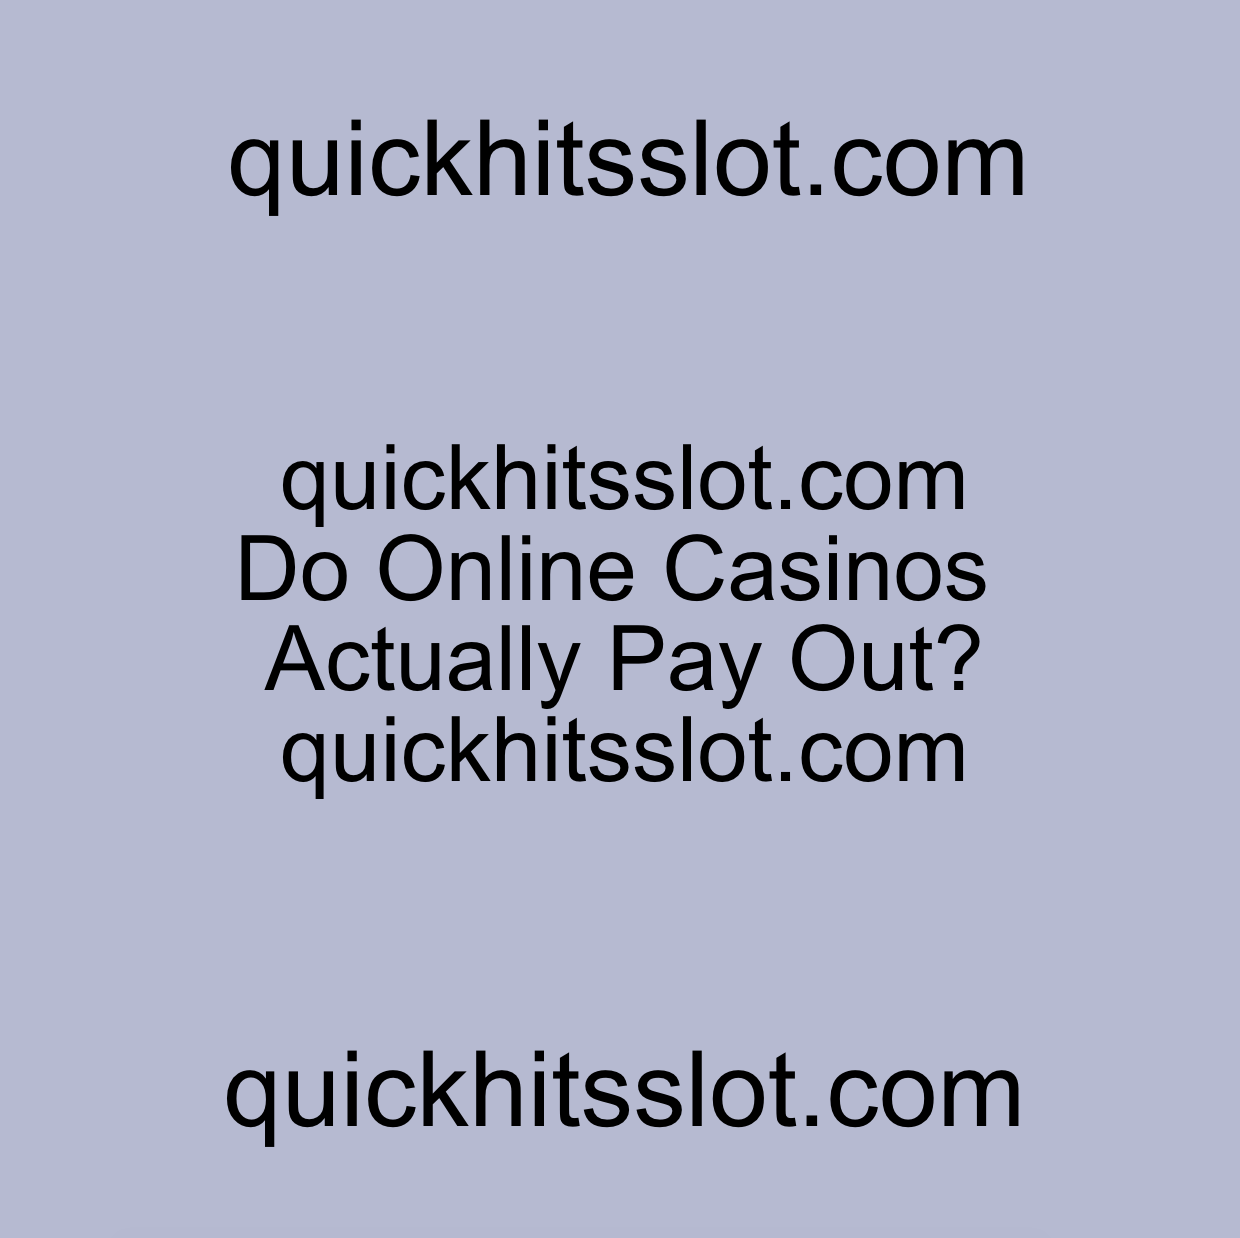 Do Online Casinos Actually Pay Out? quickhitsslot.com